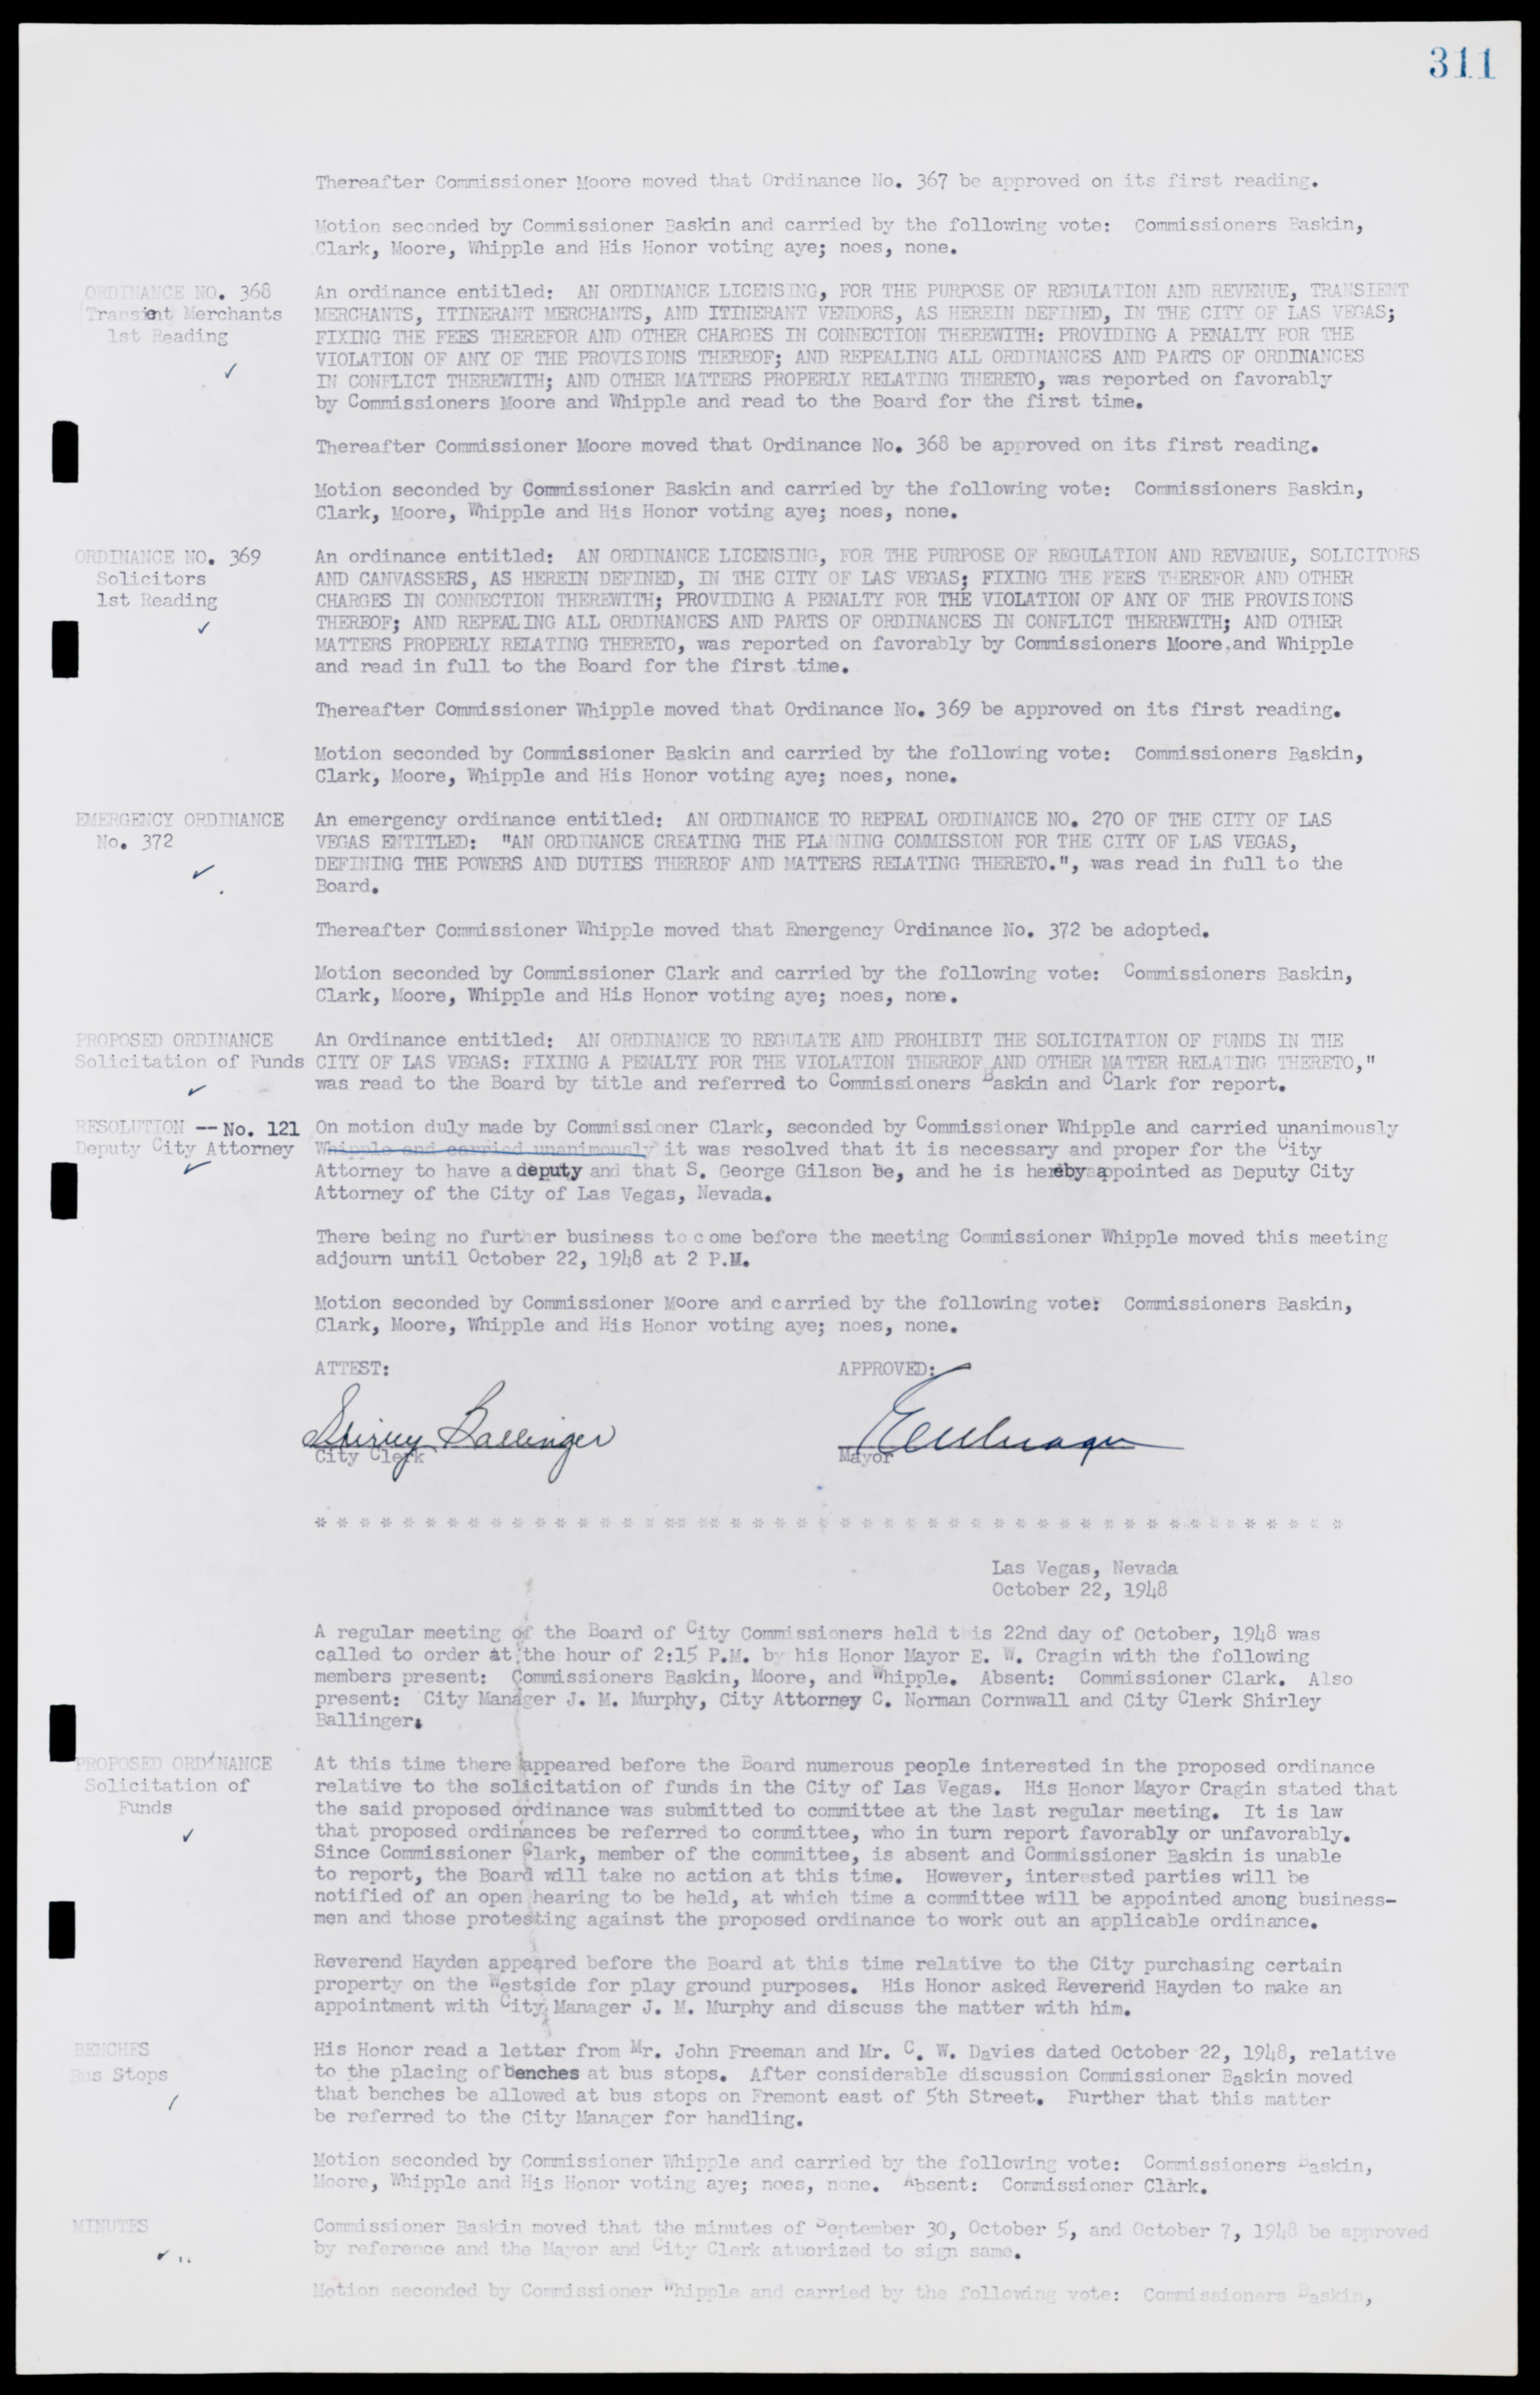 Las Vegas City Commission Minutes, January 7, 1947 to October 26, 1949, lvc000006-335